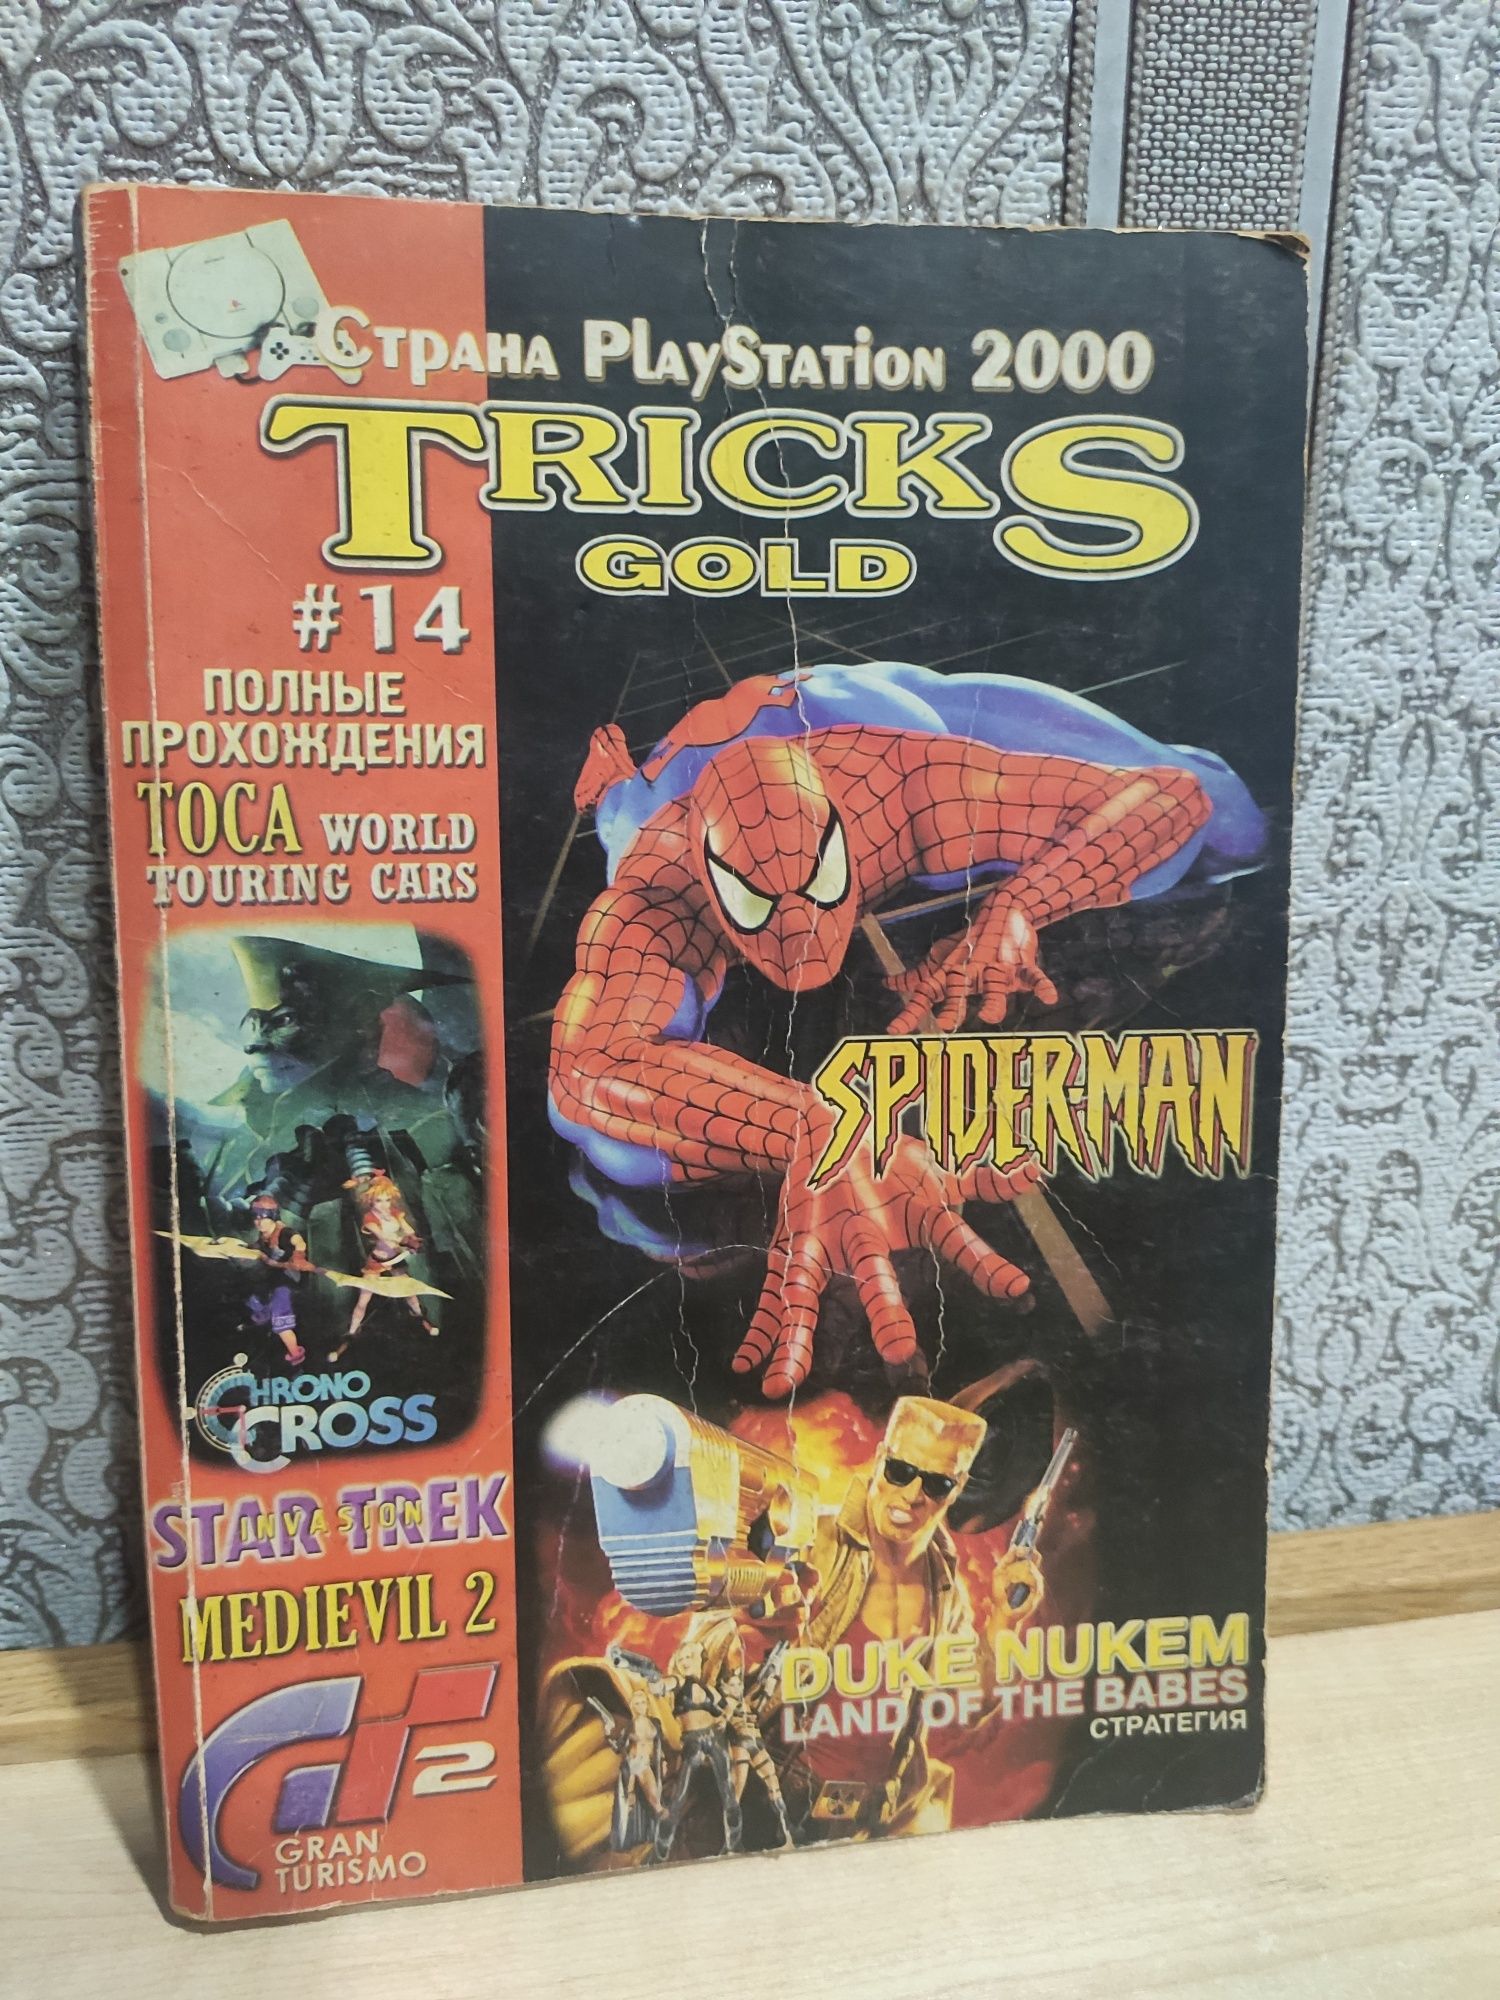 Журнал Tricks gold Страна PlayStation, а также игровые зарубежные журн